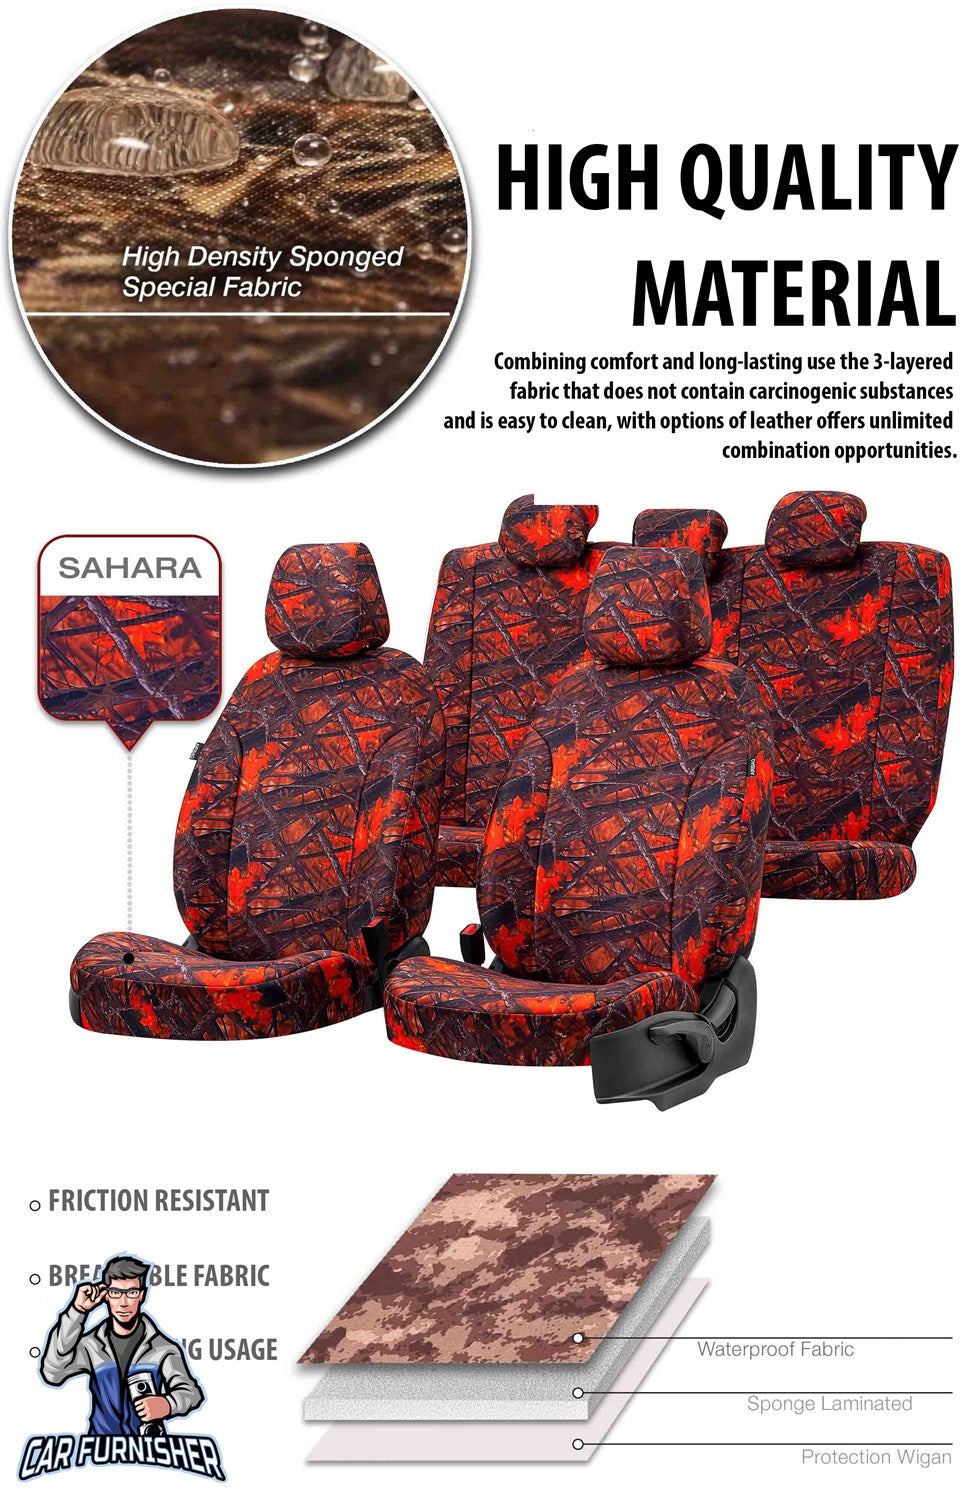 Bmw 1 Series Seat Cover Camouflage Waterproof Design Himalayan Camo Waterproof Fabric